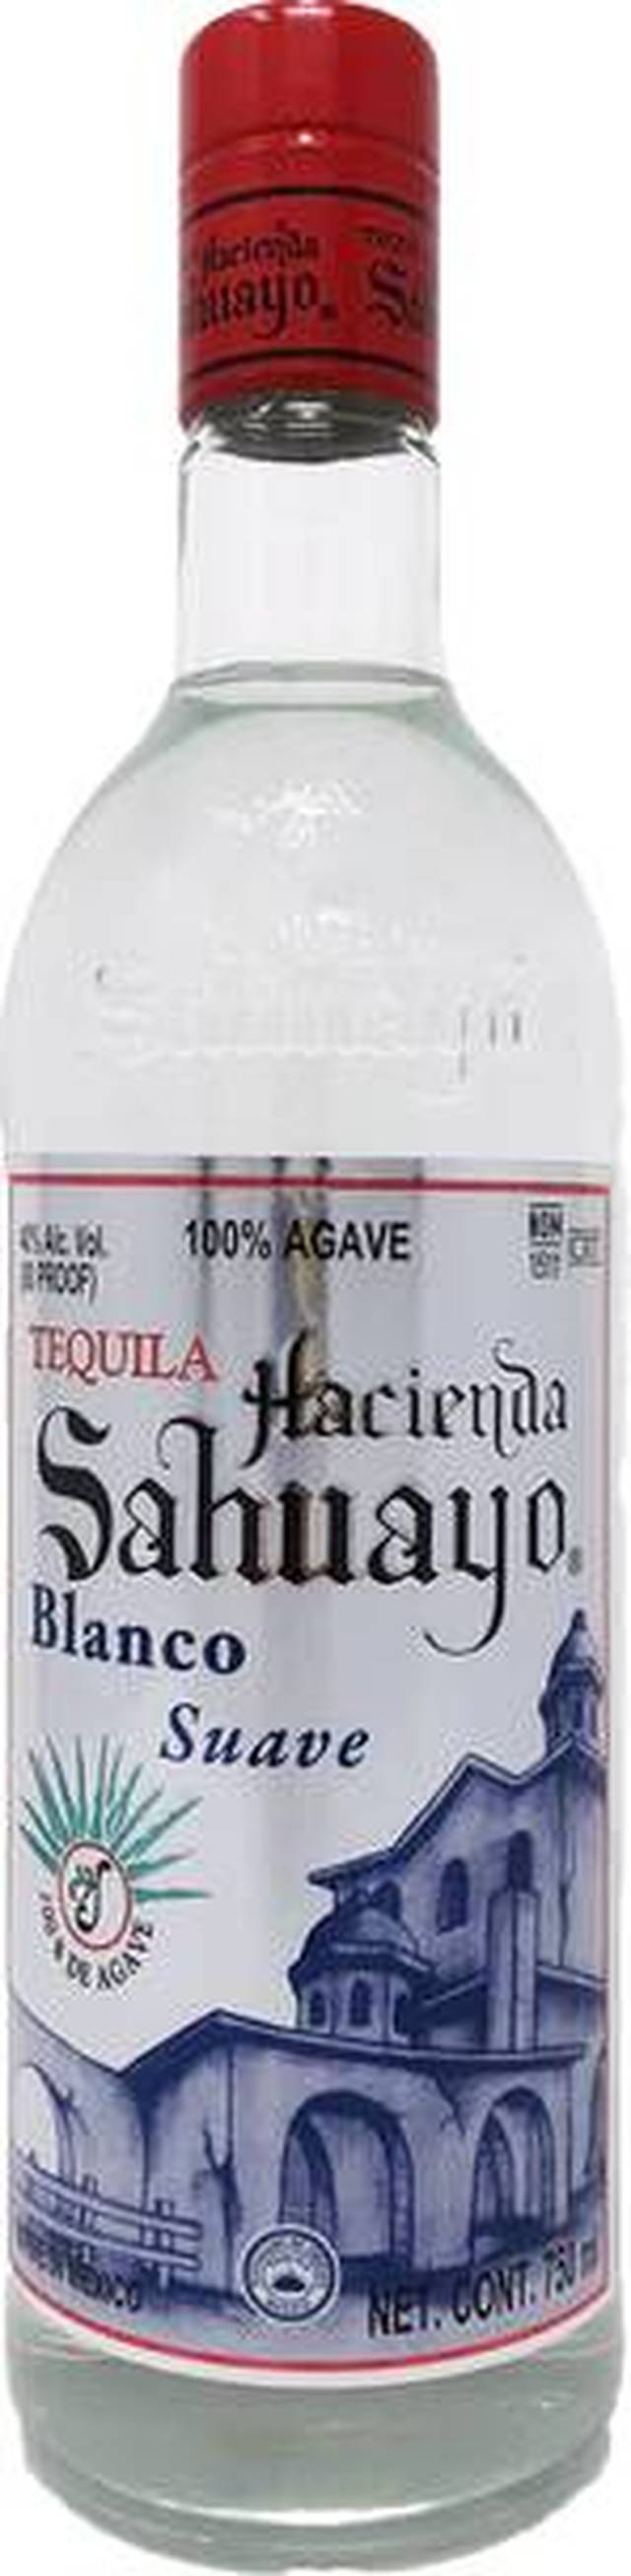 Hacienda Sahuayo Blanco Suave Tequila